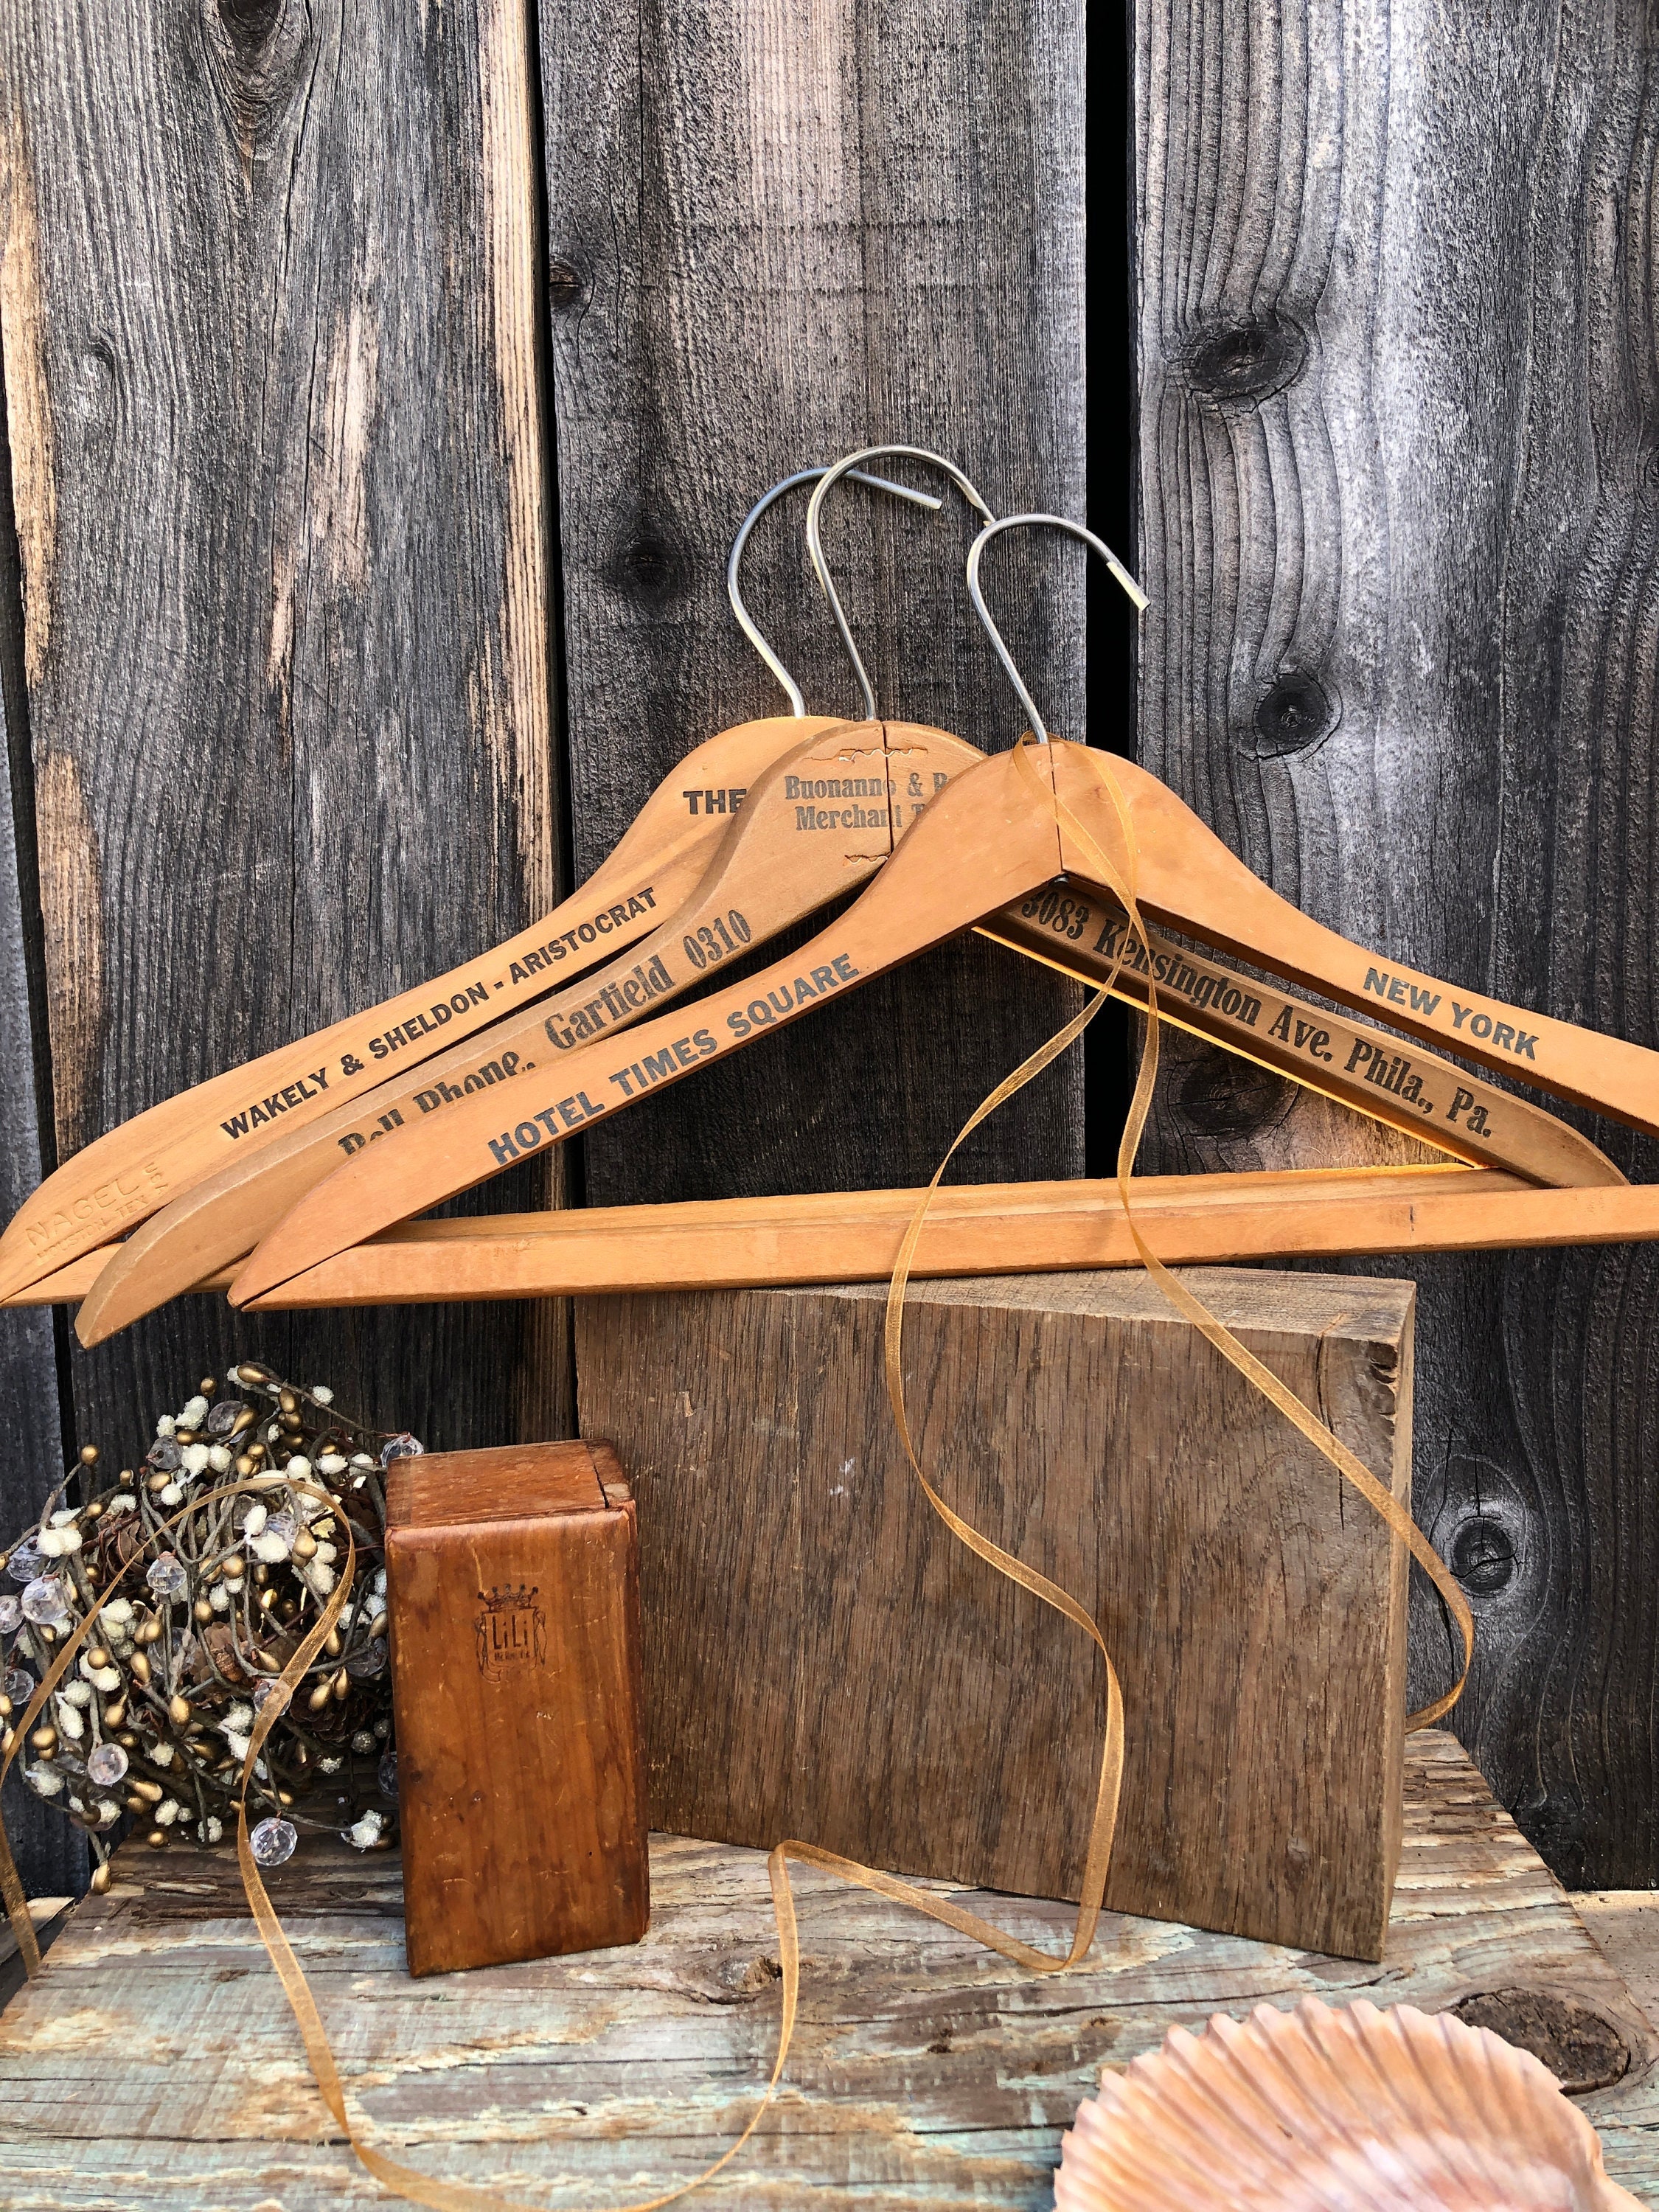 5pcs Black Wooden Suit Hangers with Precisely Cut Notches &